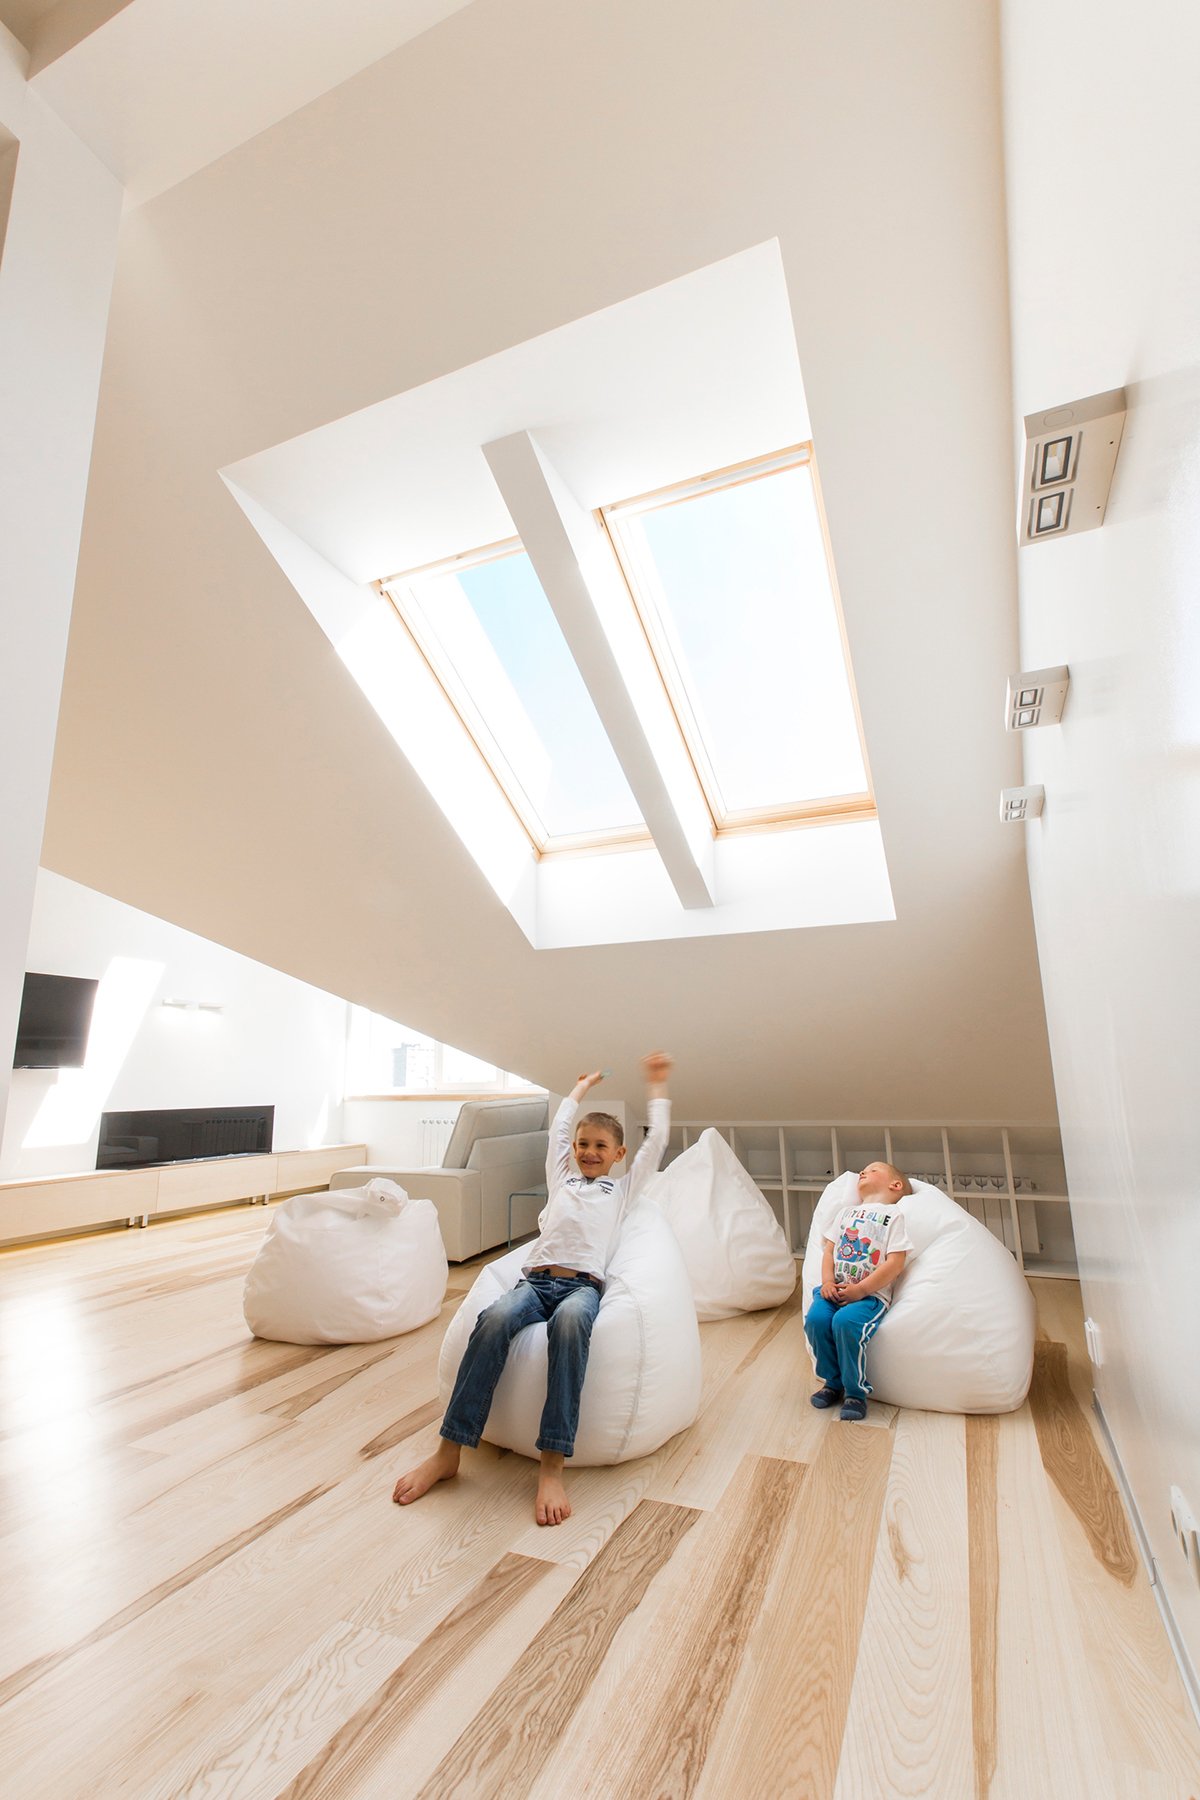 Attic With Low Ceiling Design Ideas